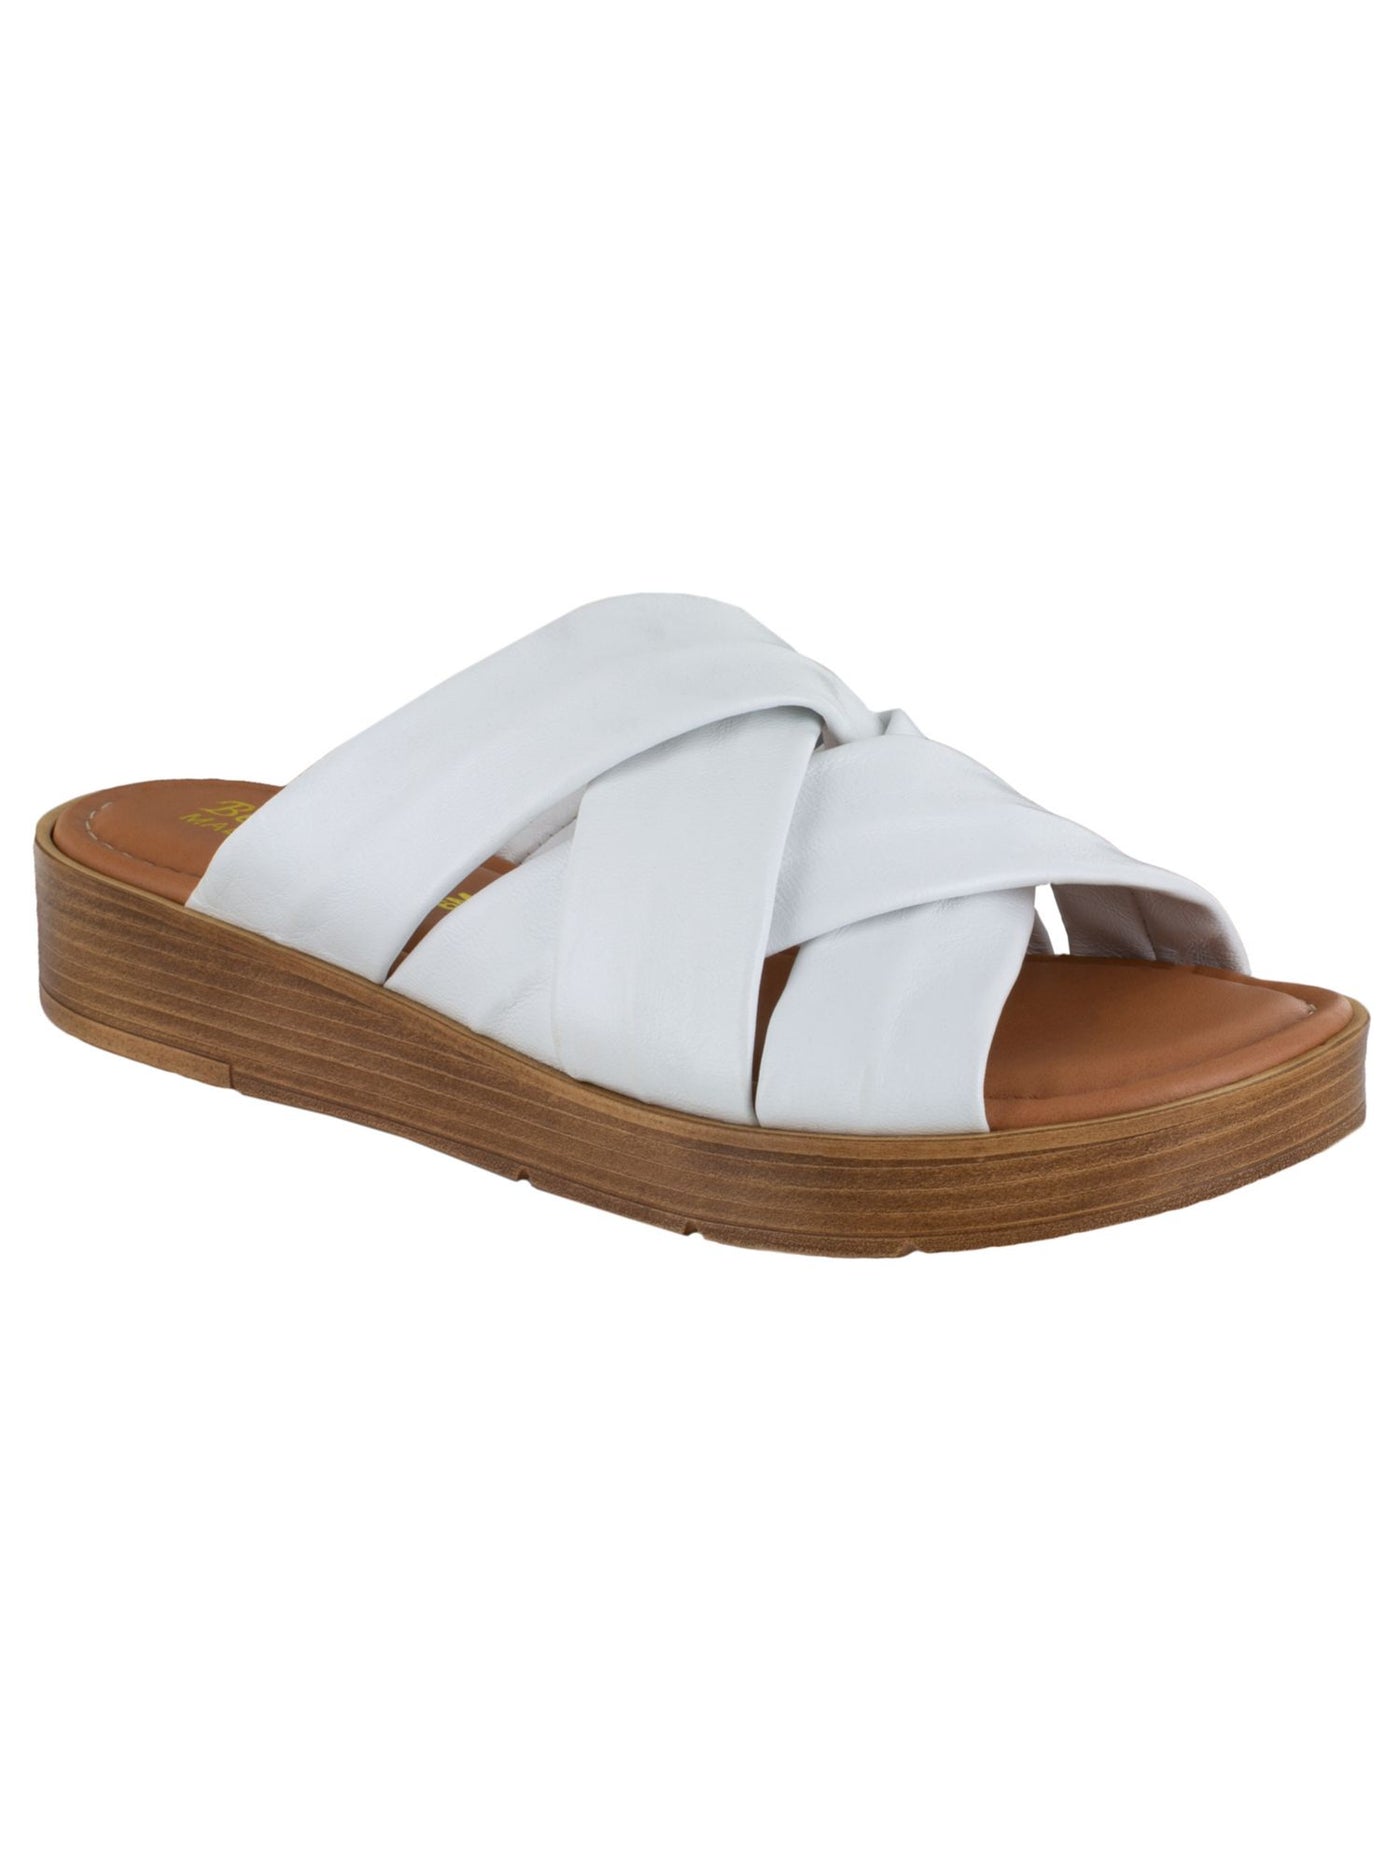 BELLA VITA Womens White 0.5" Platform Padded Comfort Tor-italy Round Toe Wedge Slip On Leather Slide Sandals Shoes 11 M